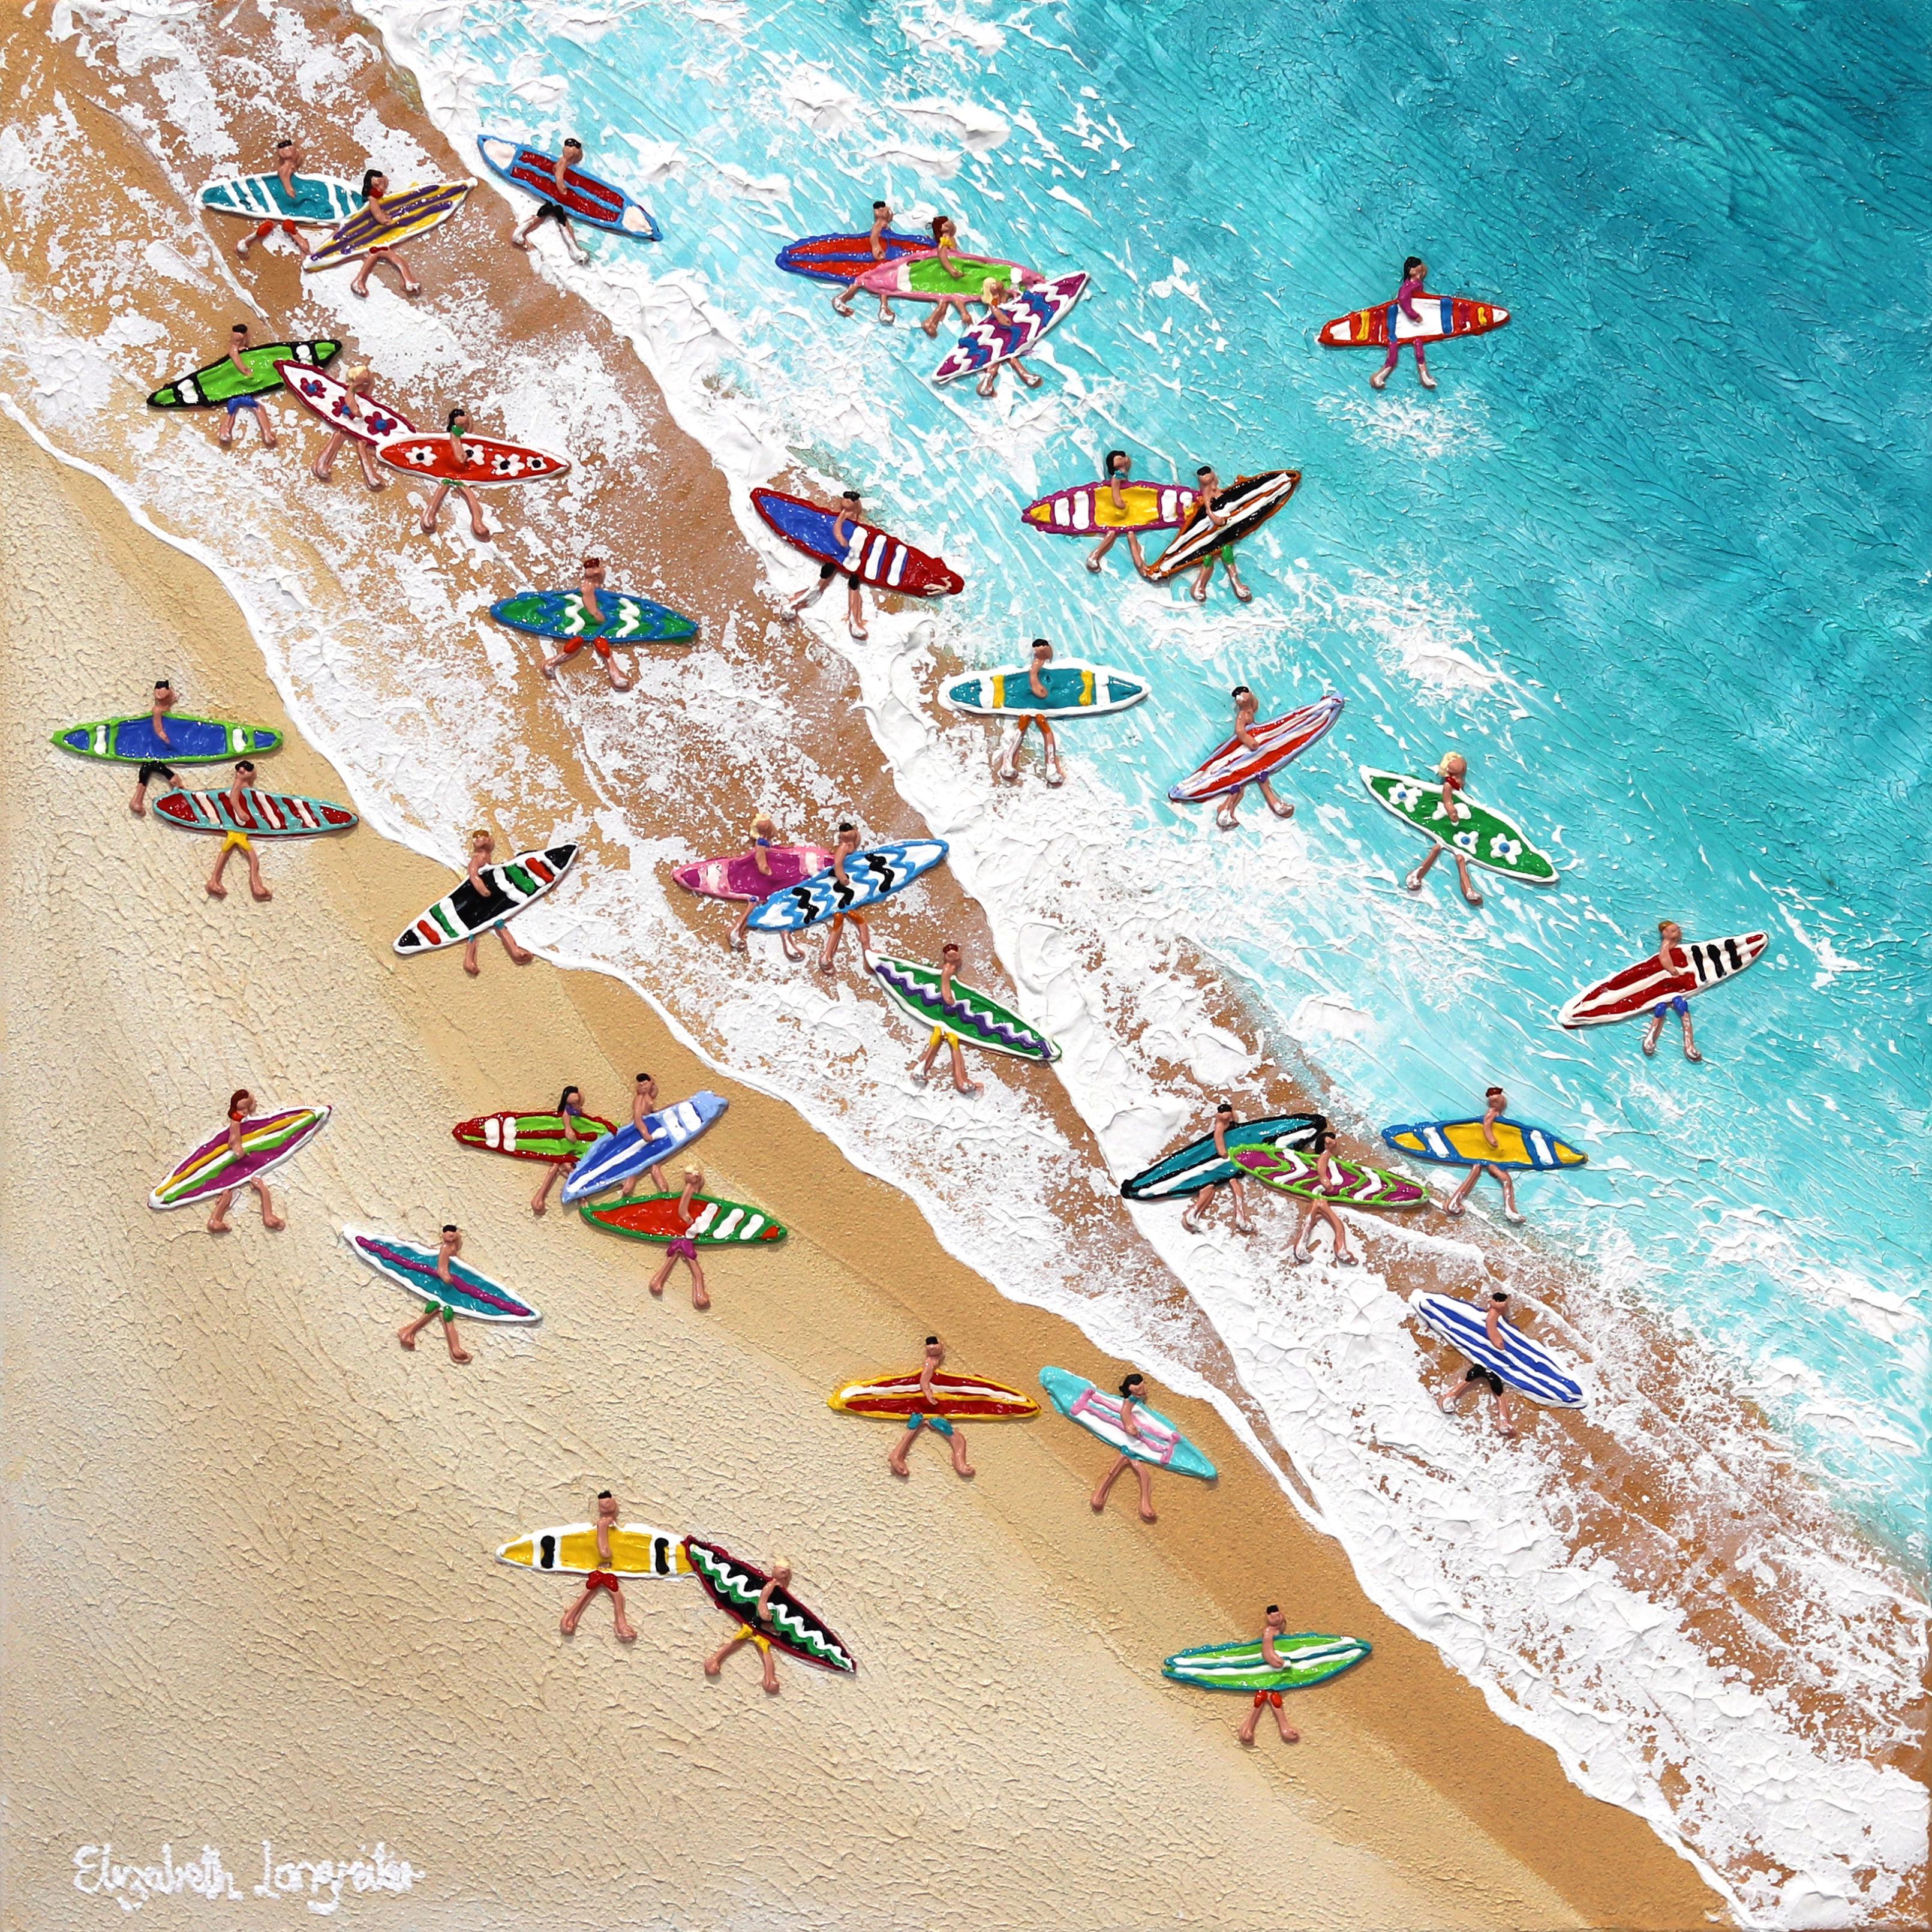 Sun Sand Surf - Textural Three Dimensional Original Seascape Beach Painting - Mixed Media Art by Elizabeth Langreiter